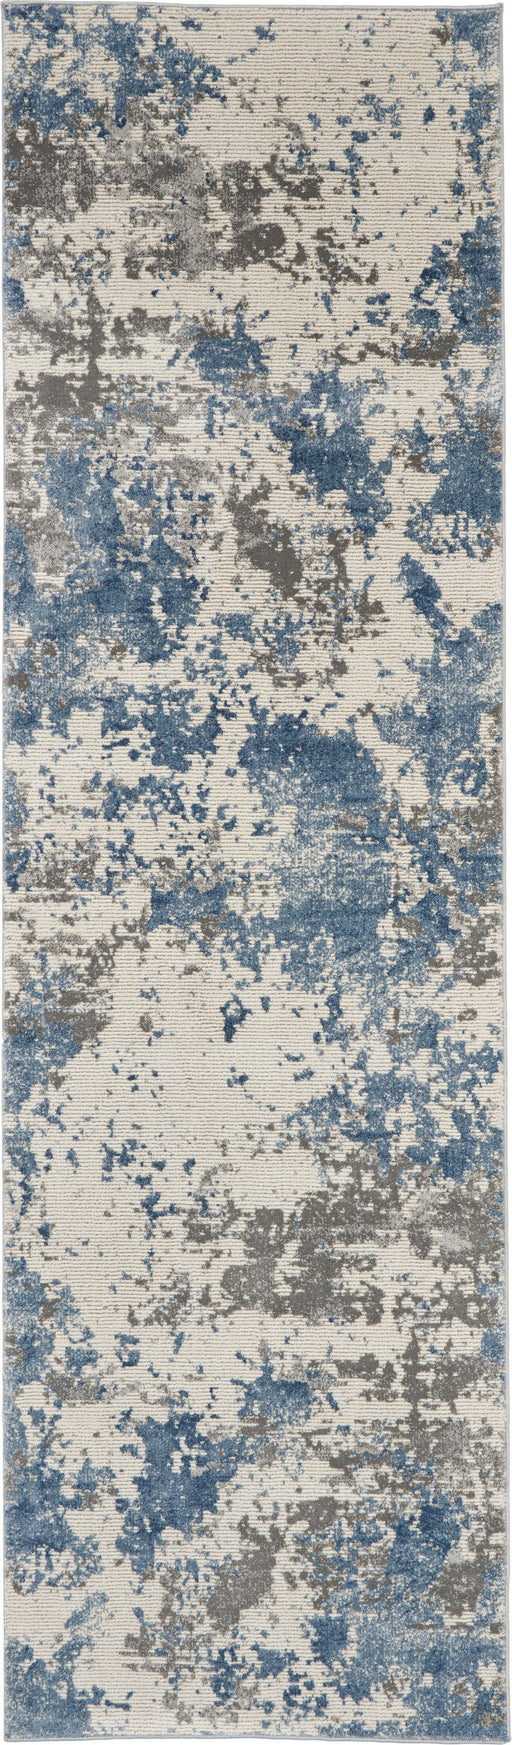 Nourison Rustic Textures RUS08 Blue and Grey 8' Runner Hallway Rug